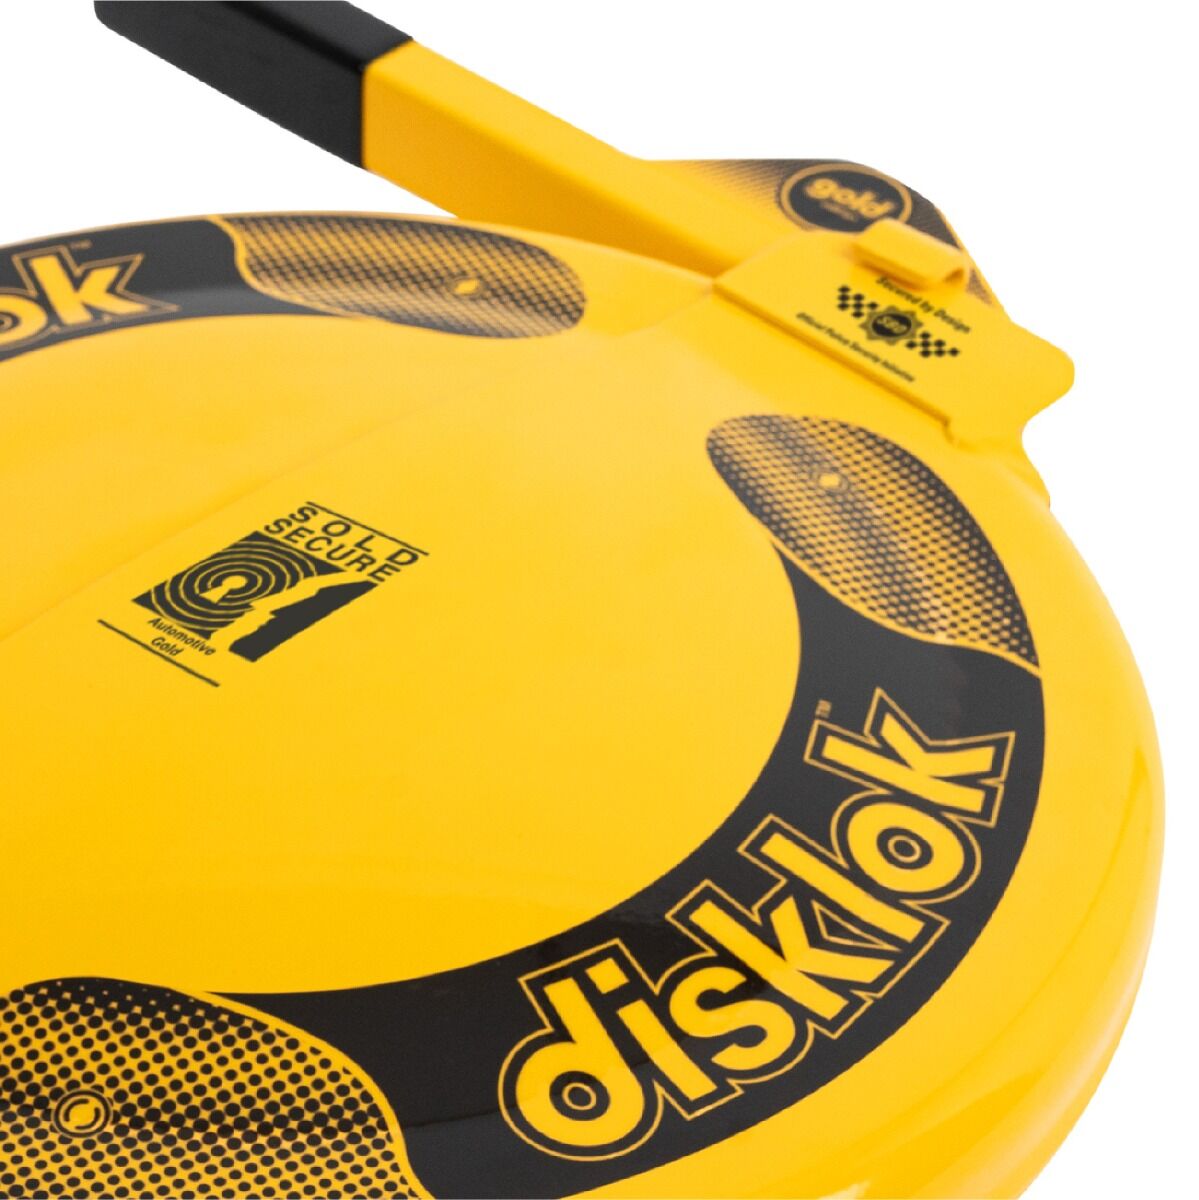 Disklok Gold Edition Small Yellow Car Steering Wheel Lock image 8